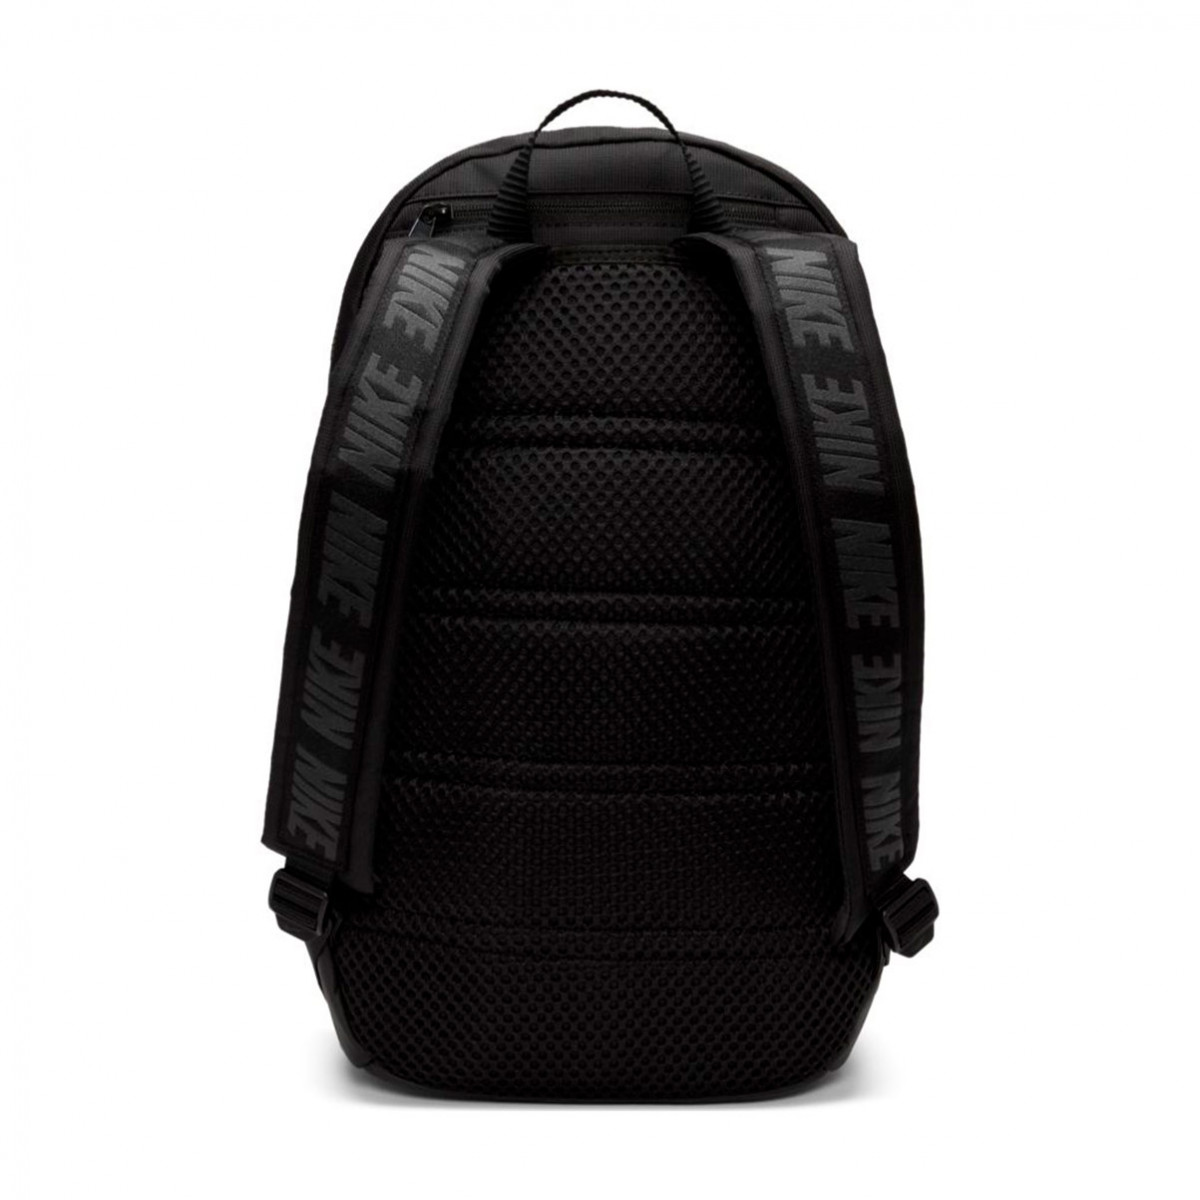 lfc backpack